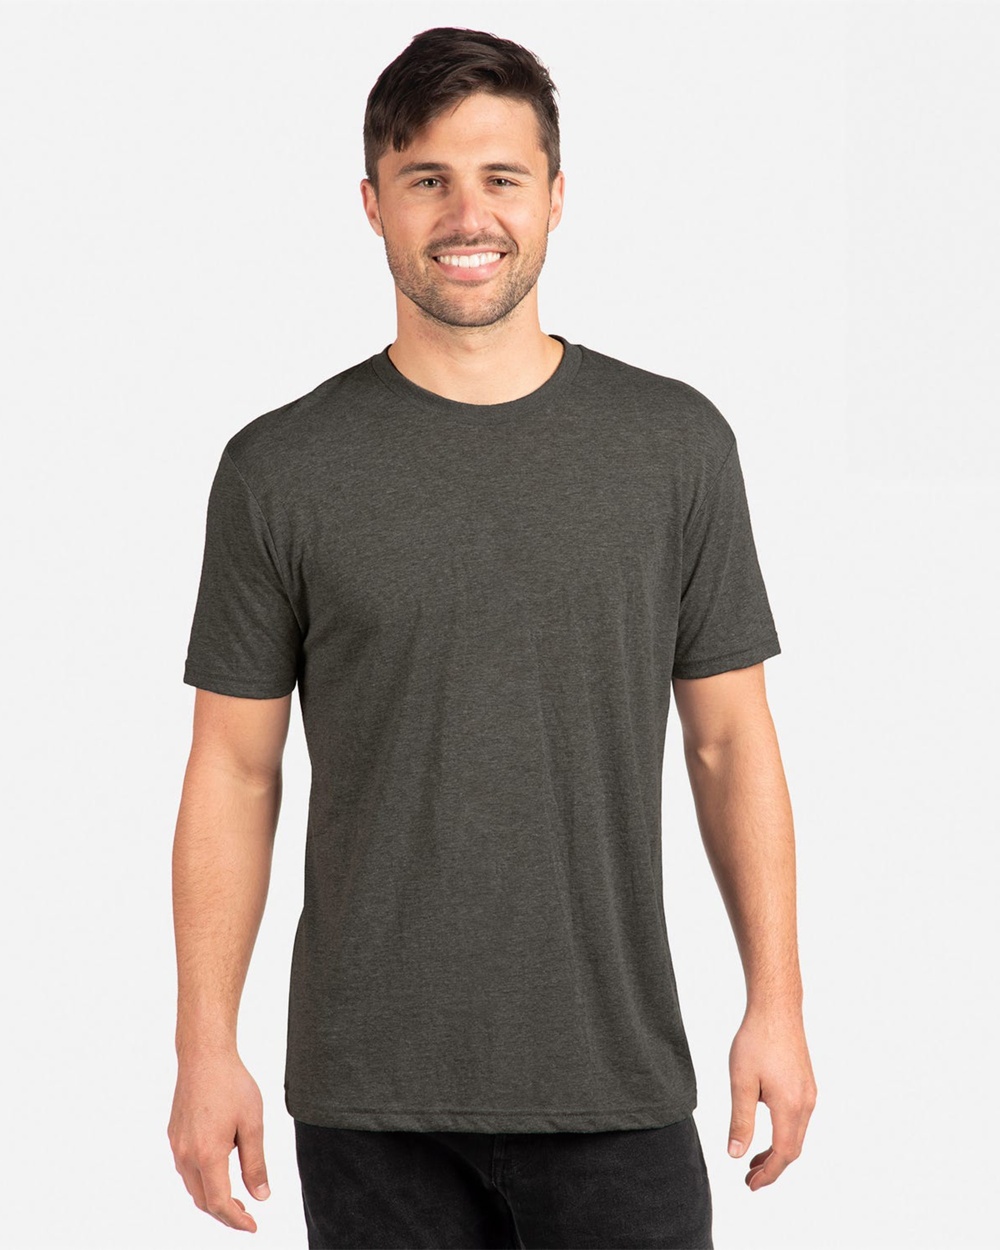 Next Level 6051 - Triblend Three-Quarter Raglan T-Shirt